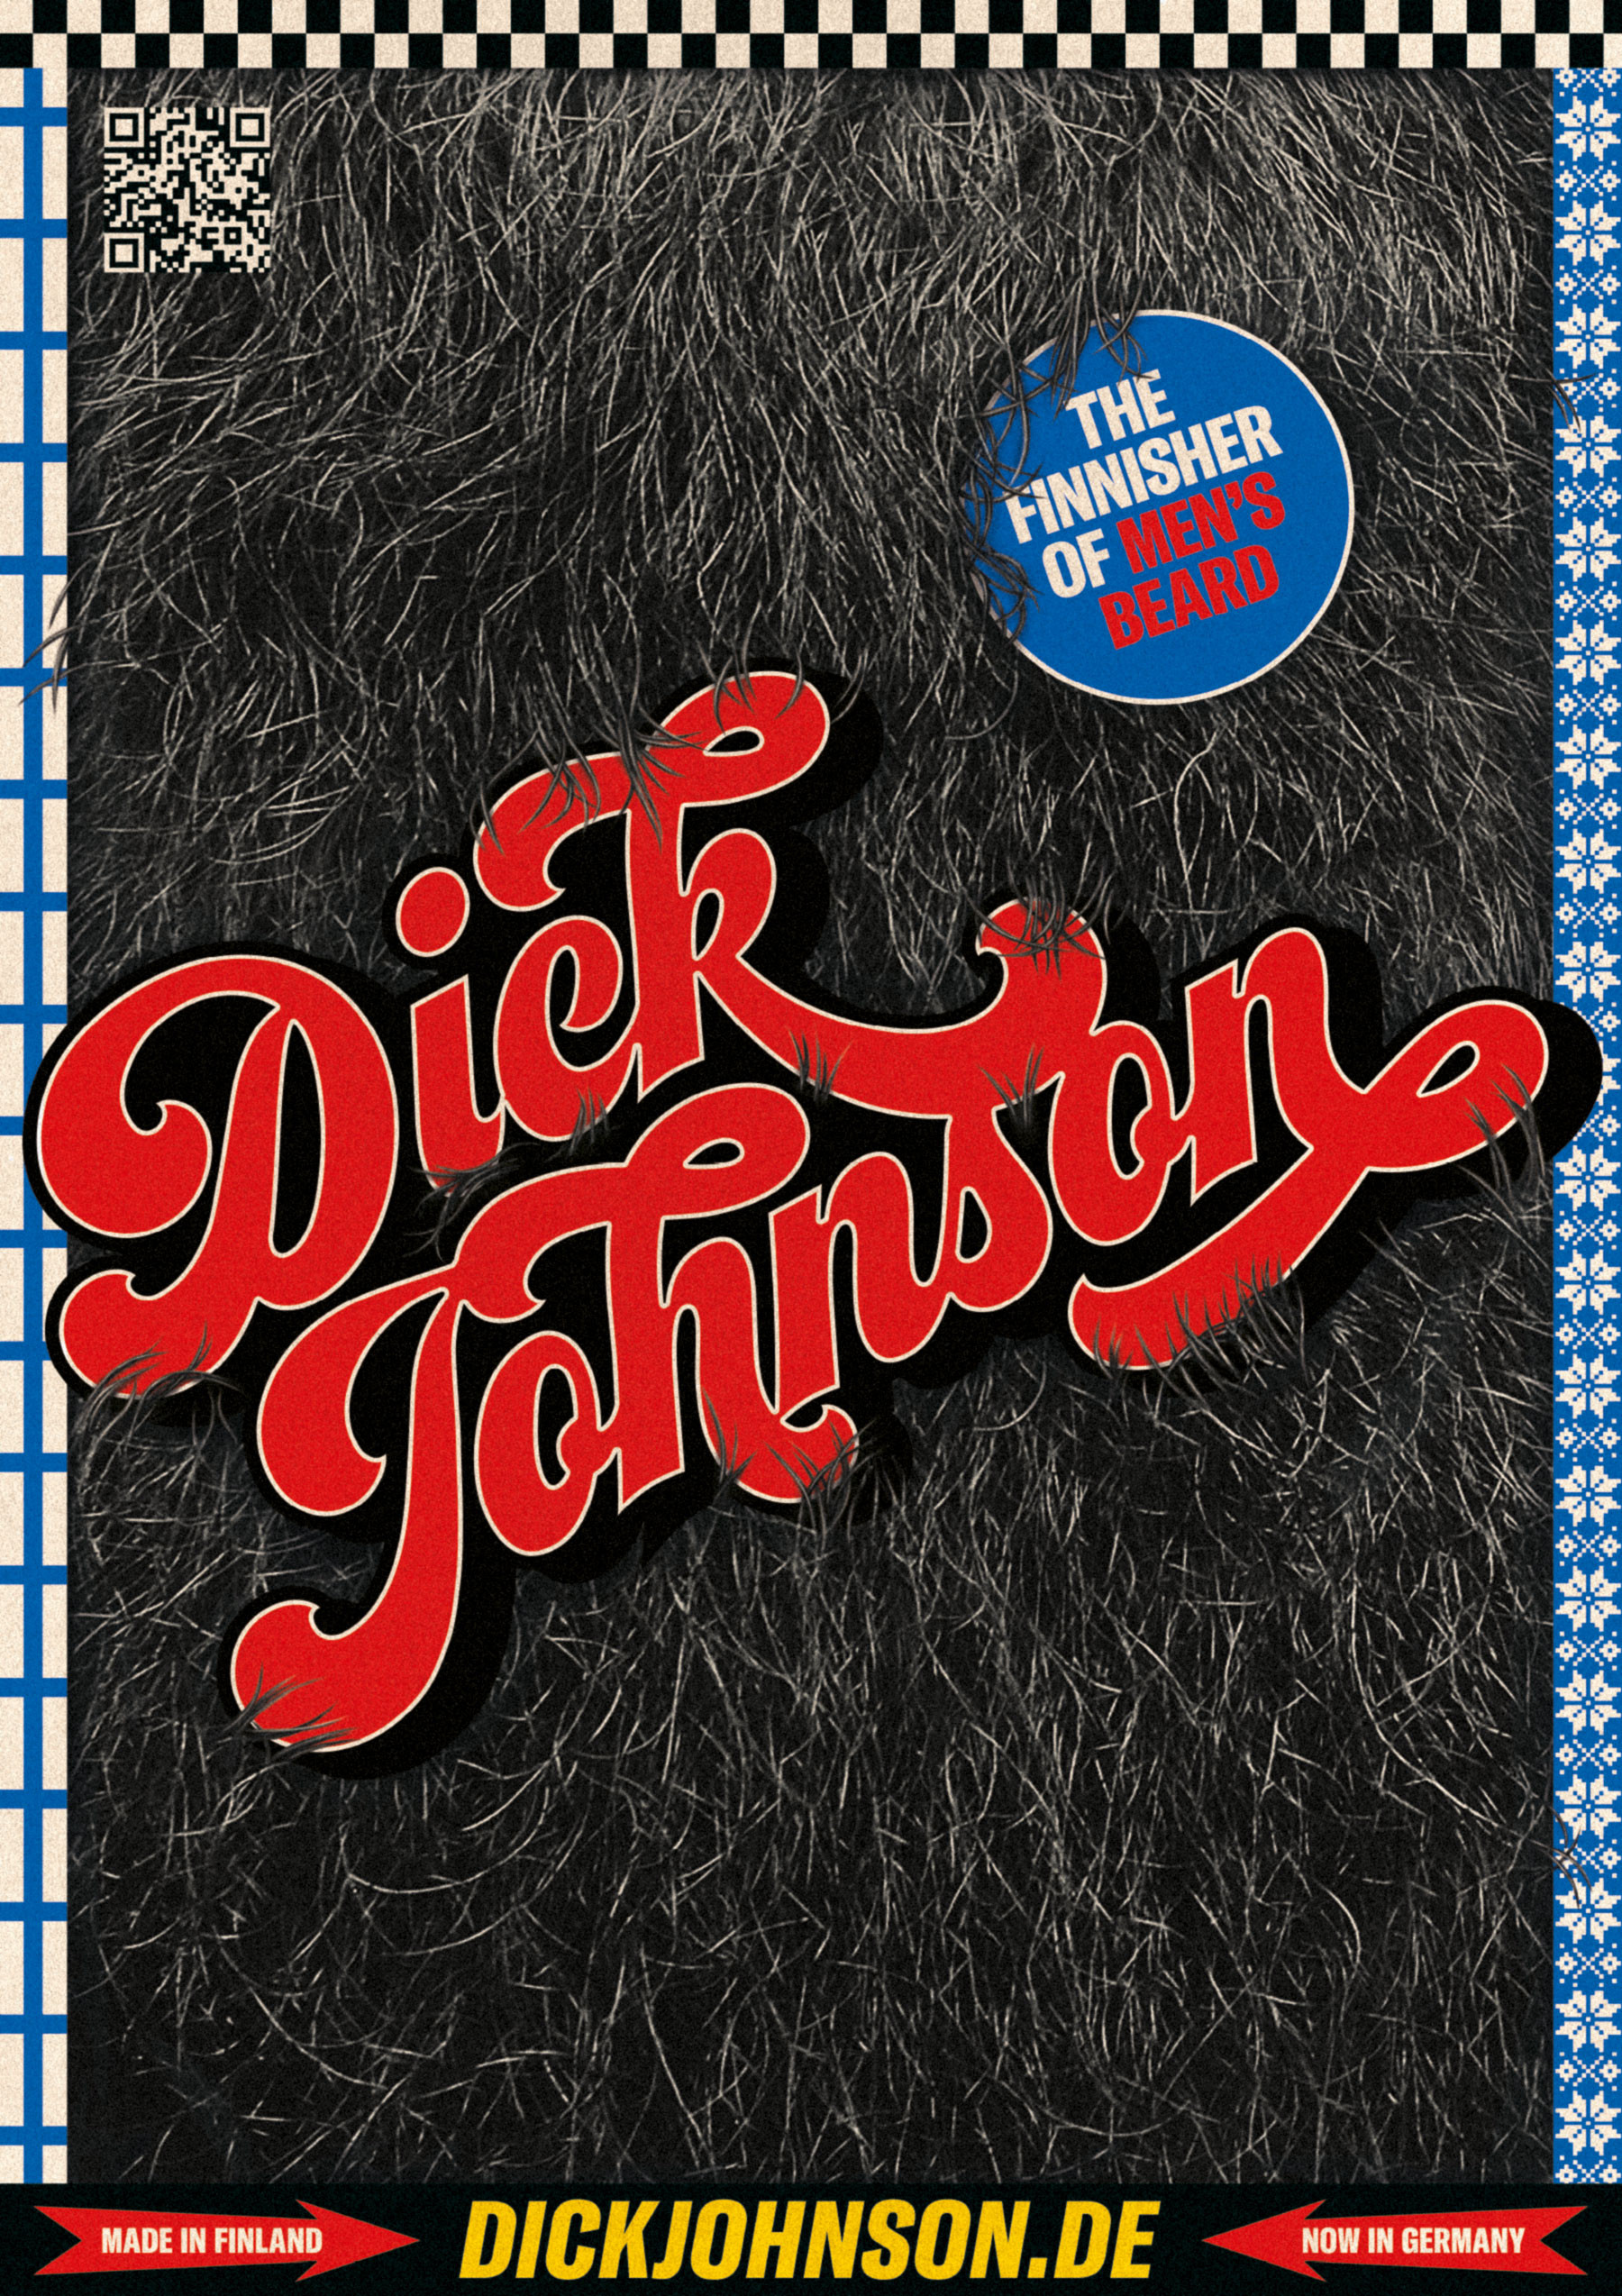 Dick Johnson. The Beard Finnisher. 11